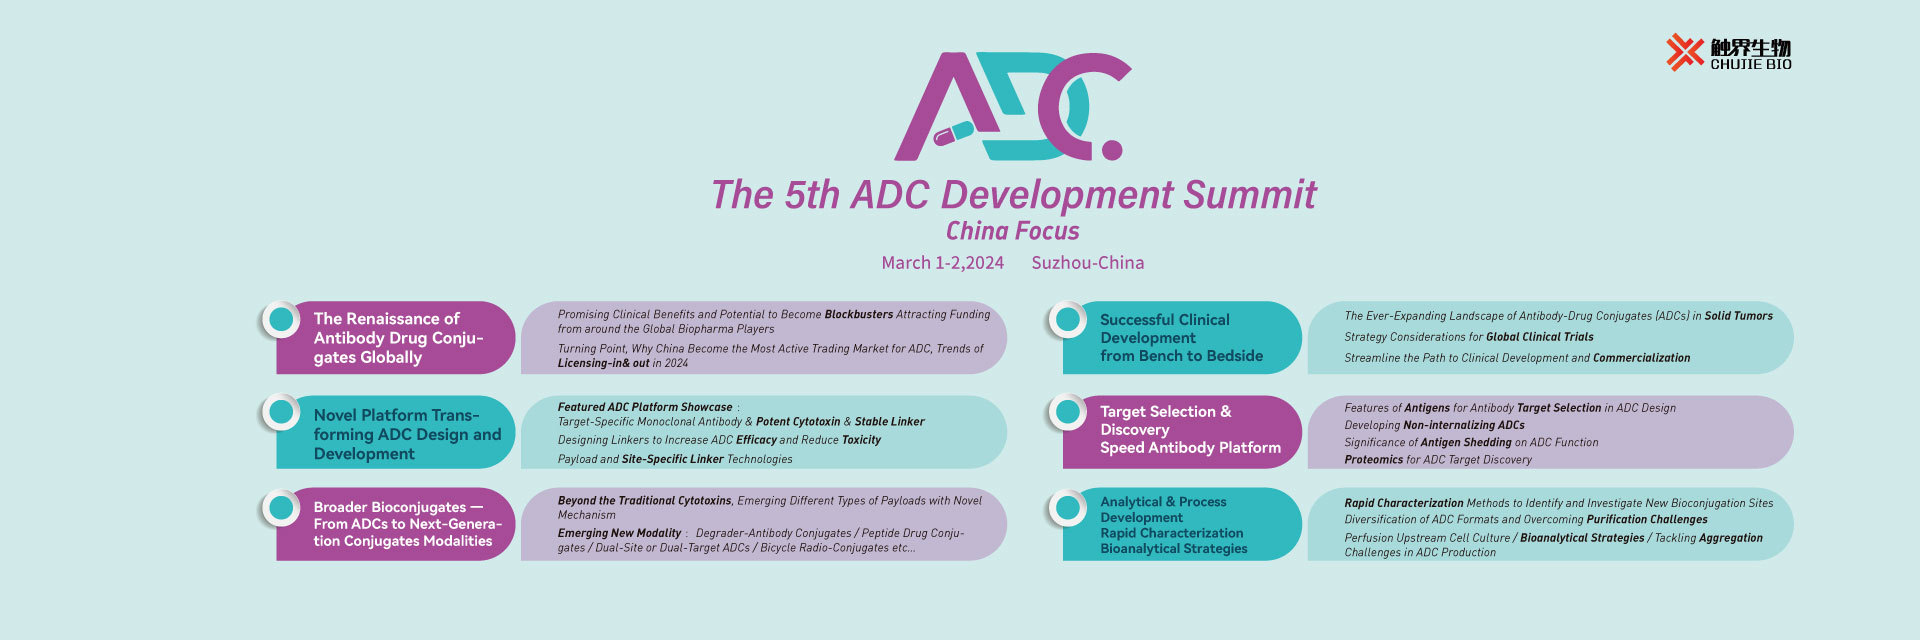 The 5th ADC Development Summit